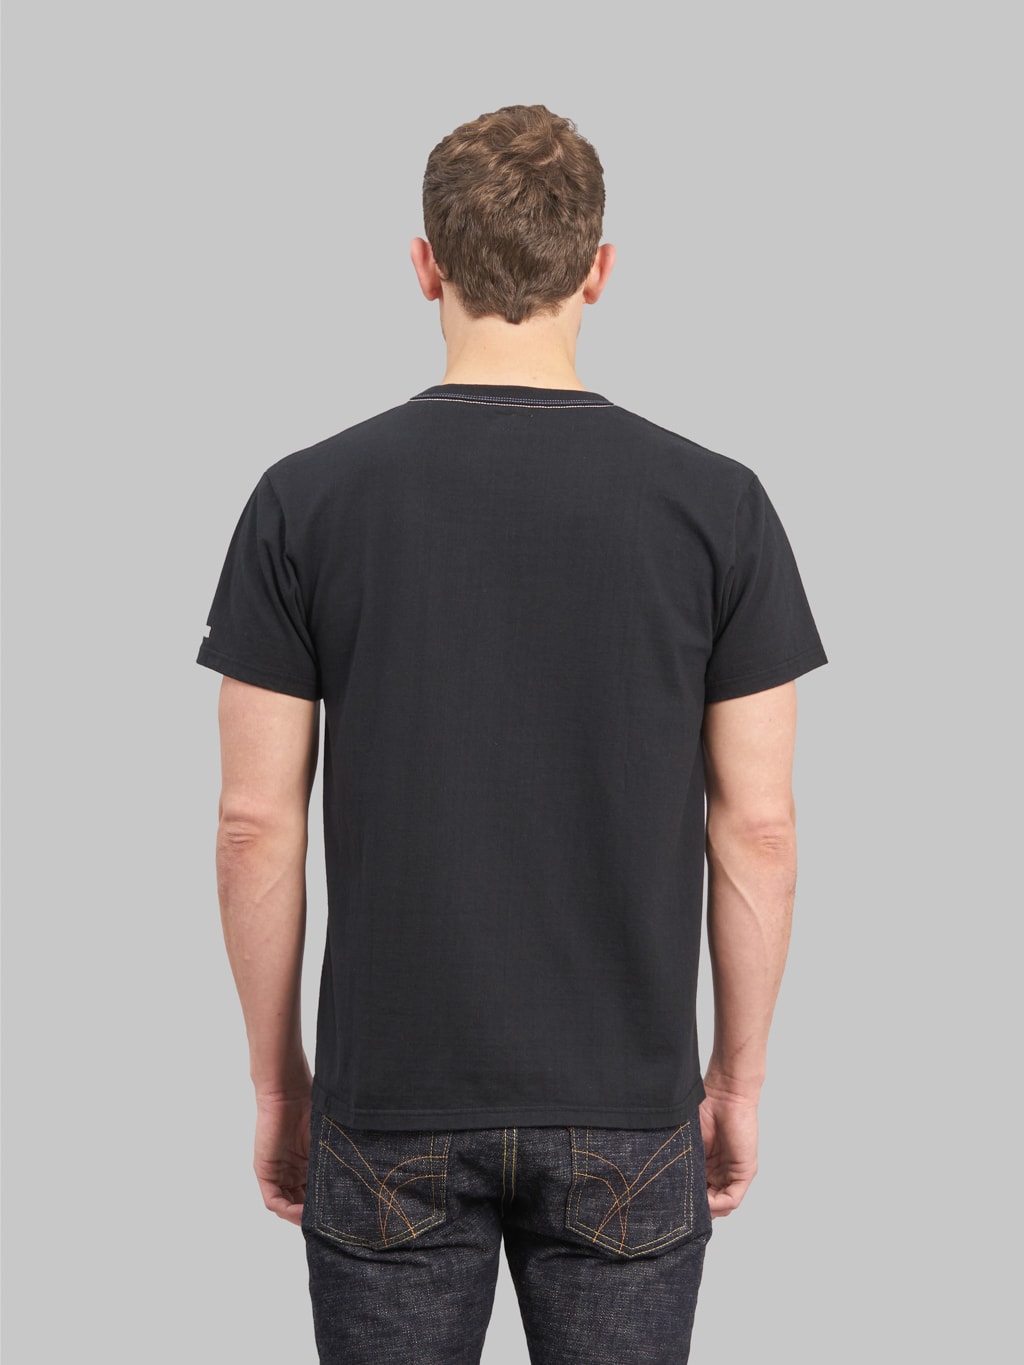 The Flat Head Loopwheeled Heavyweight Plain T-Shirt Black